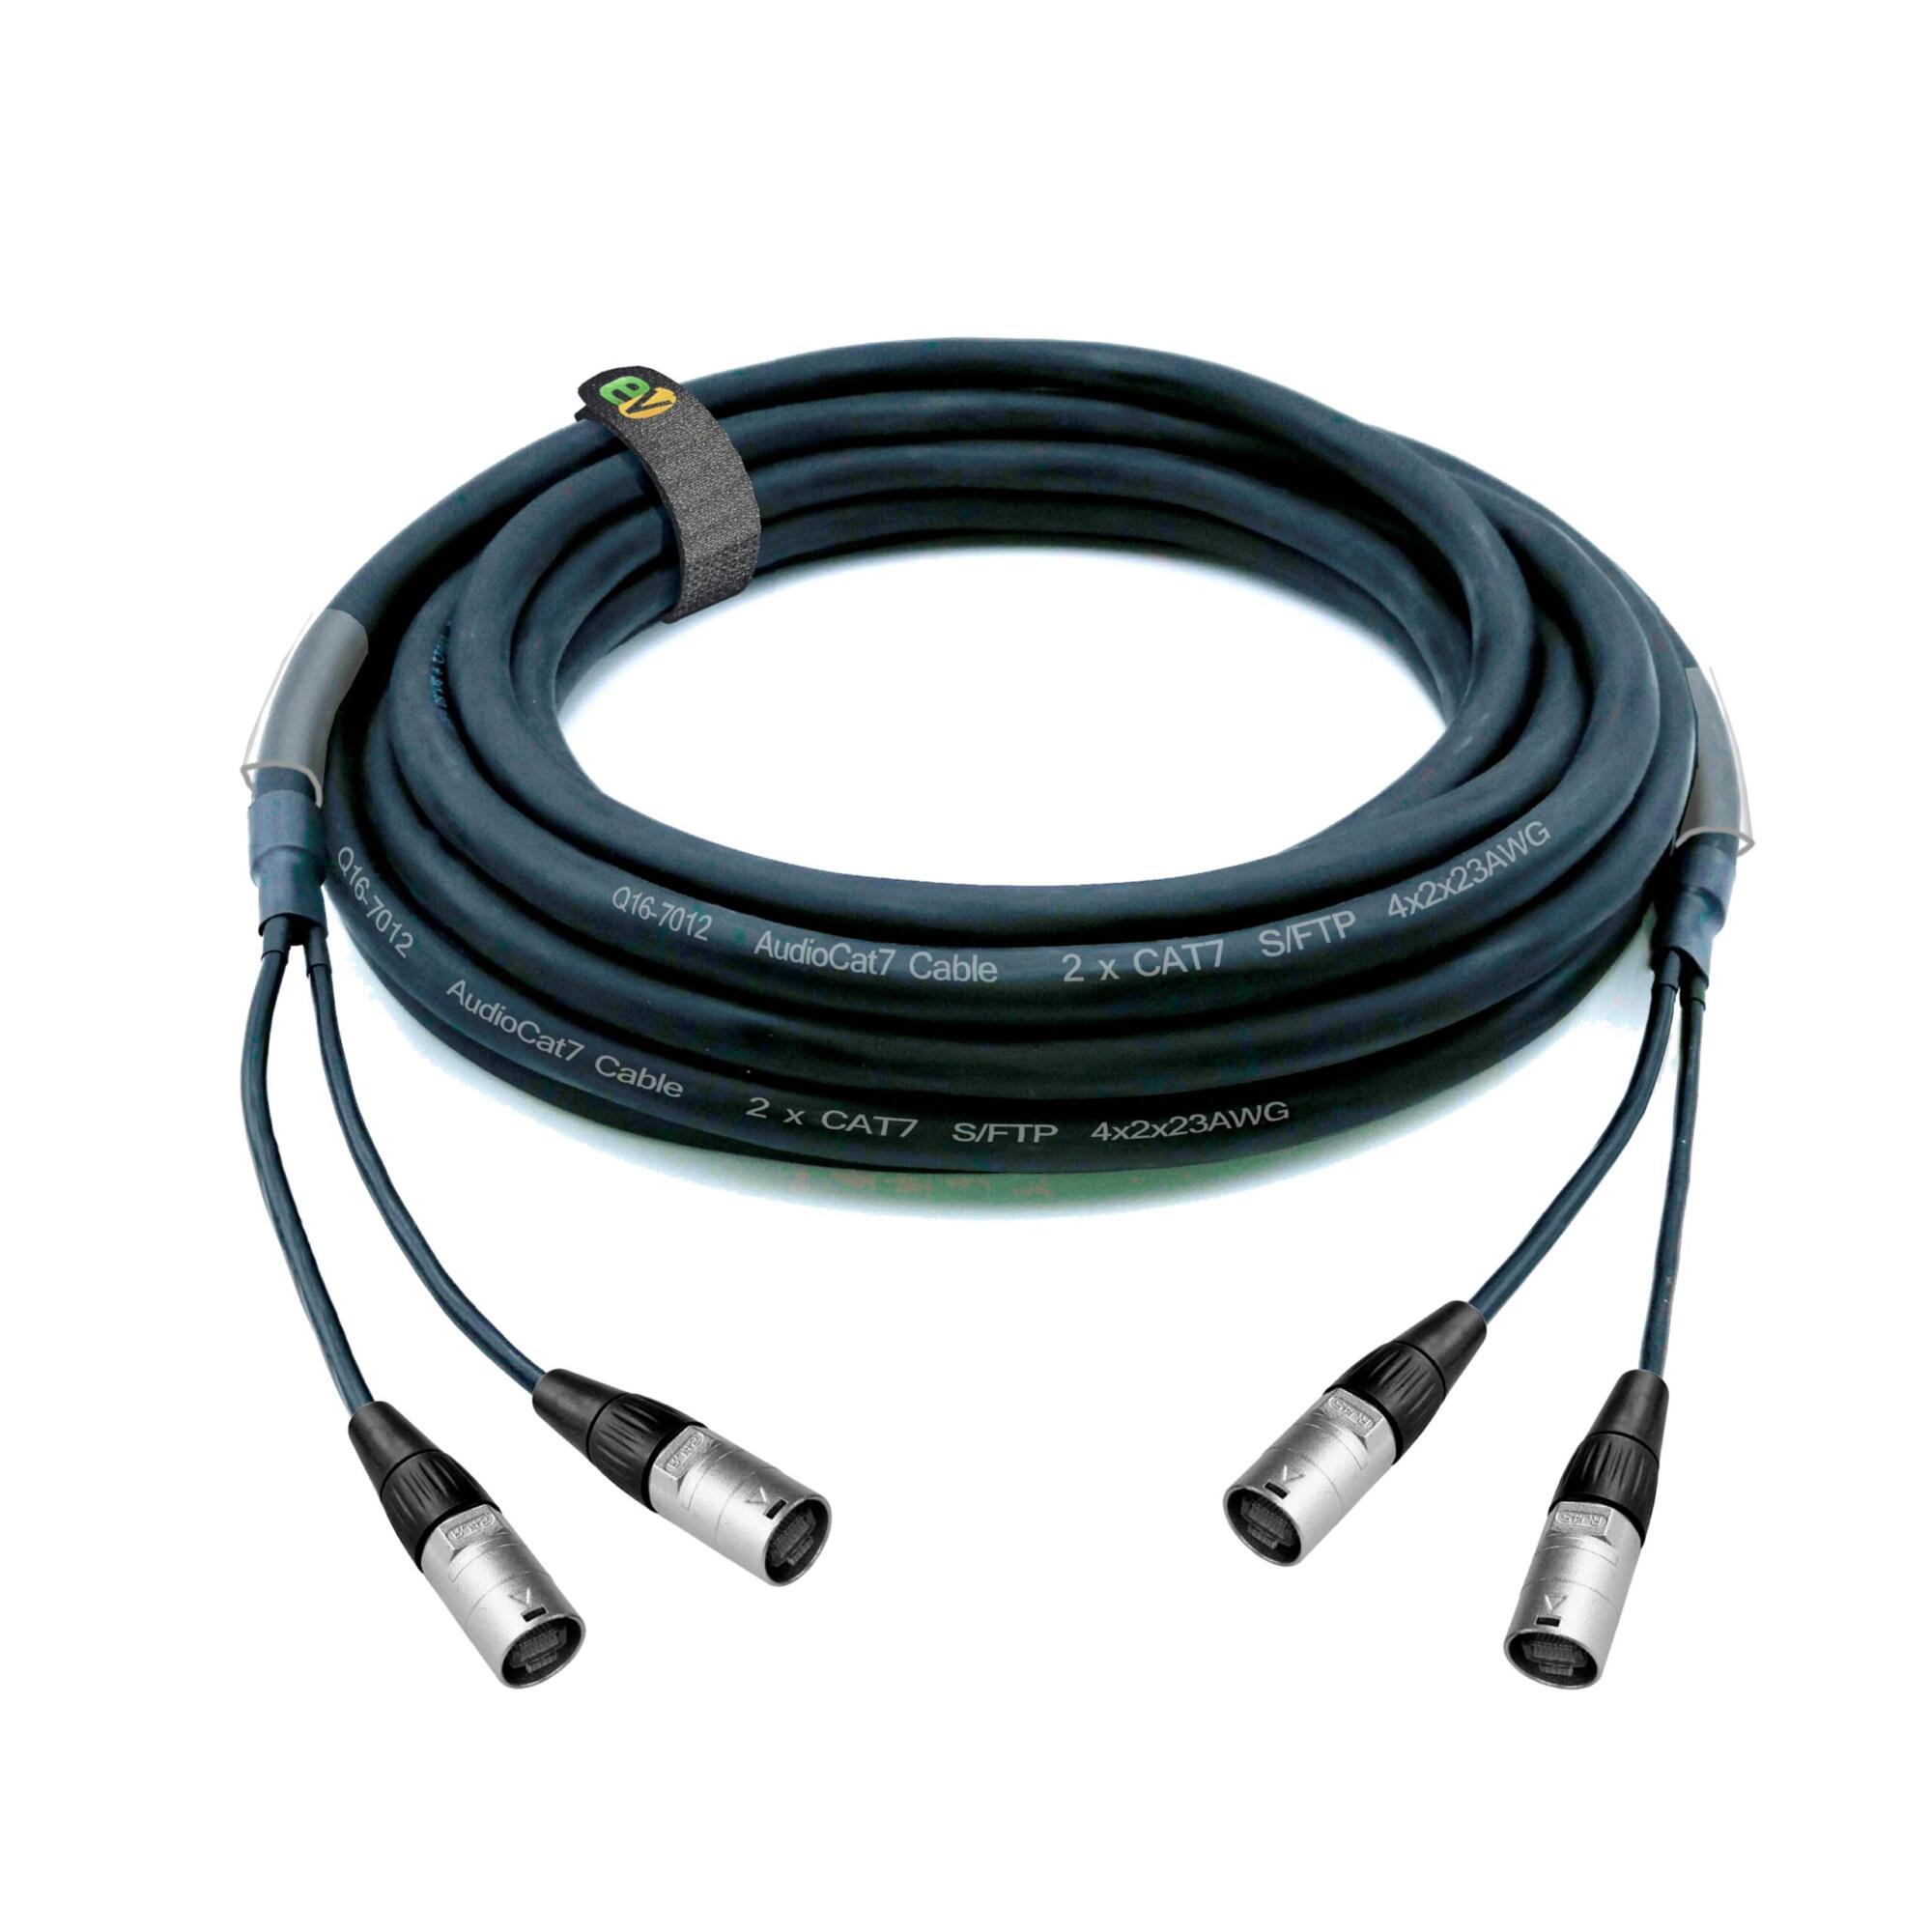 2 x LAN CAT7 S/FTP hose with RJ45 body